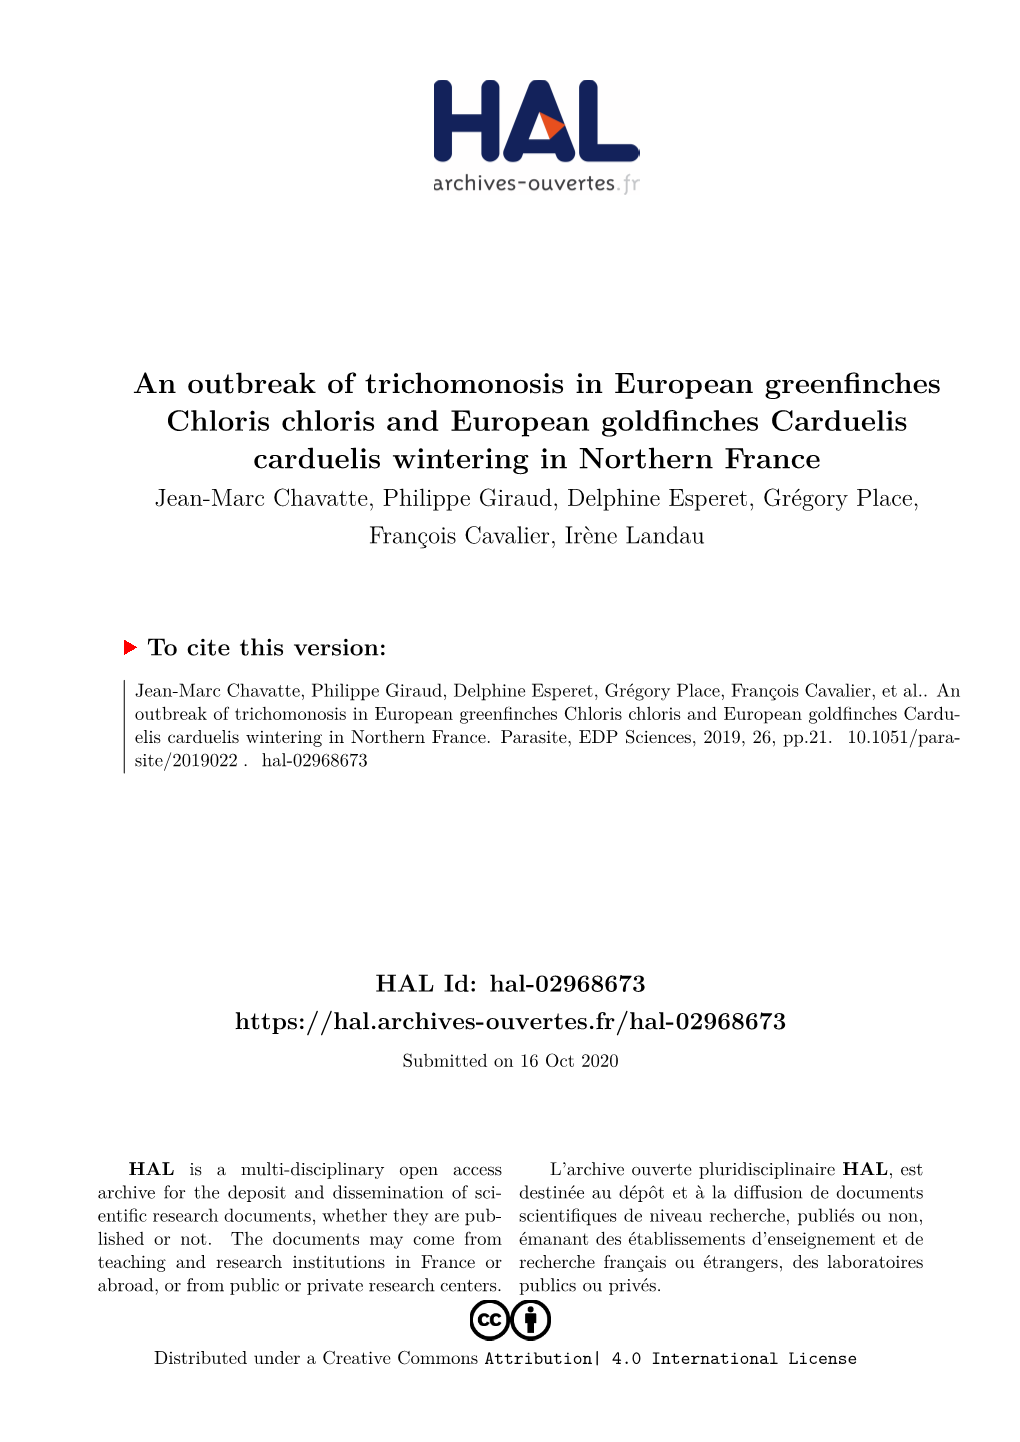 An Outbreak of Trichomonosis in European Greenfinches Chloris Chloris and European Goldfinches Carduelis Carduelis Wintering In